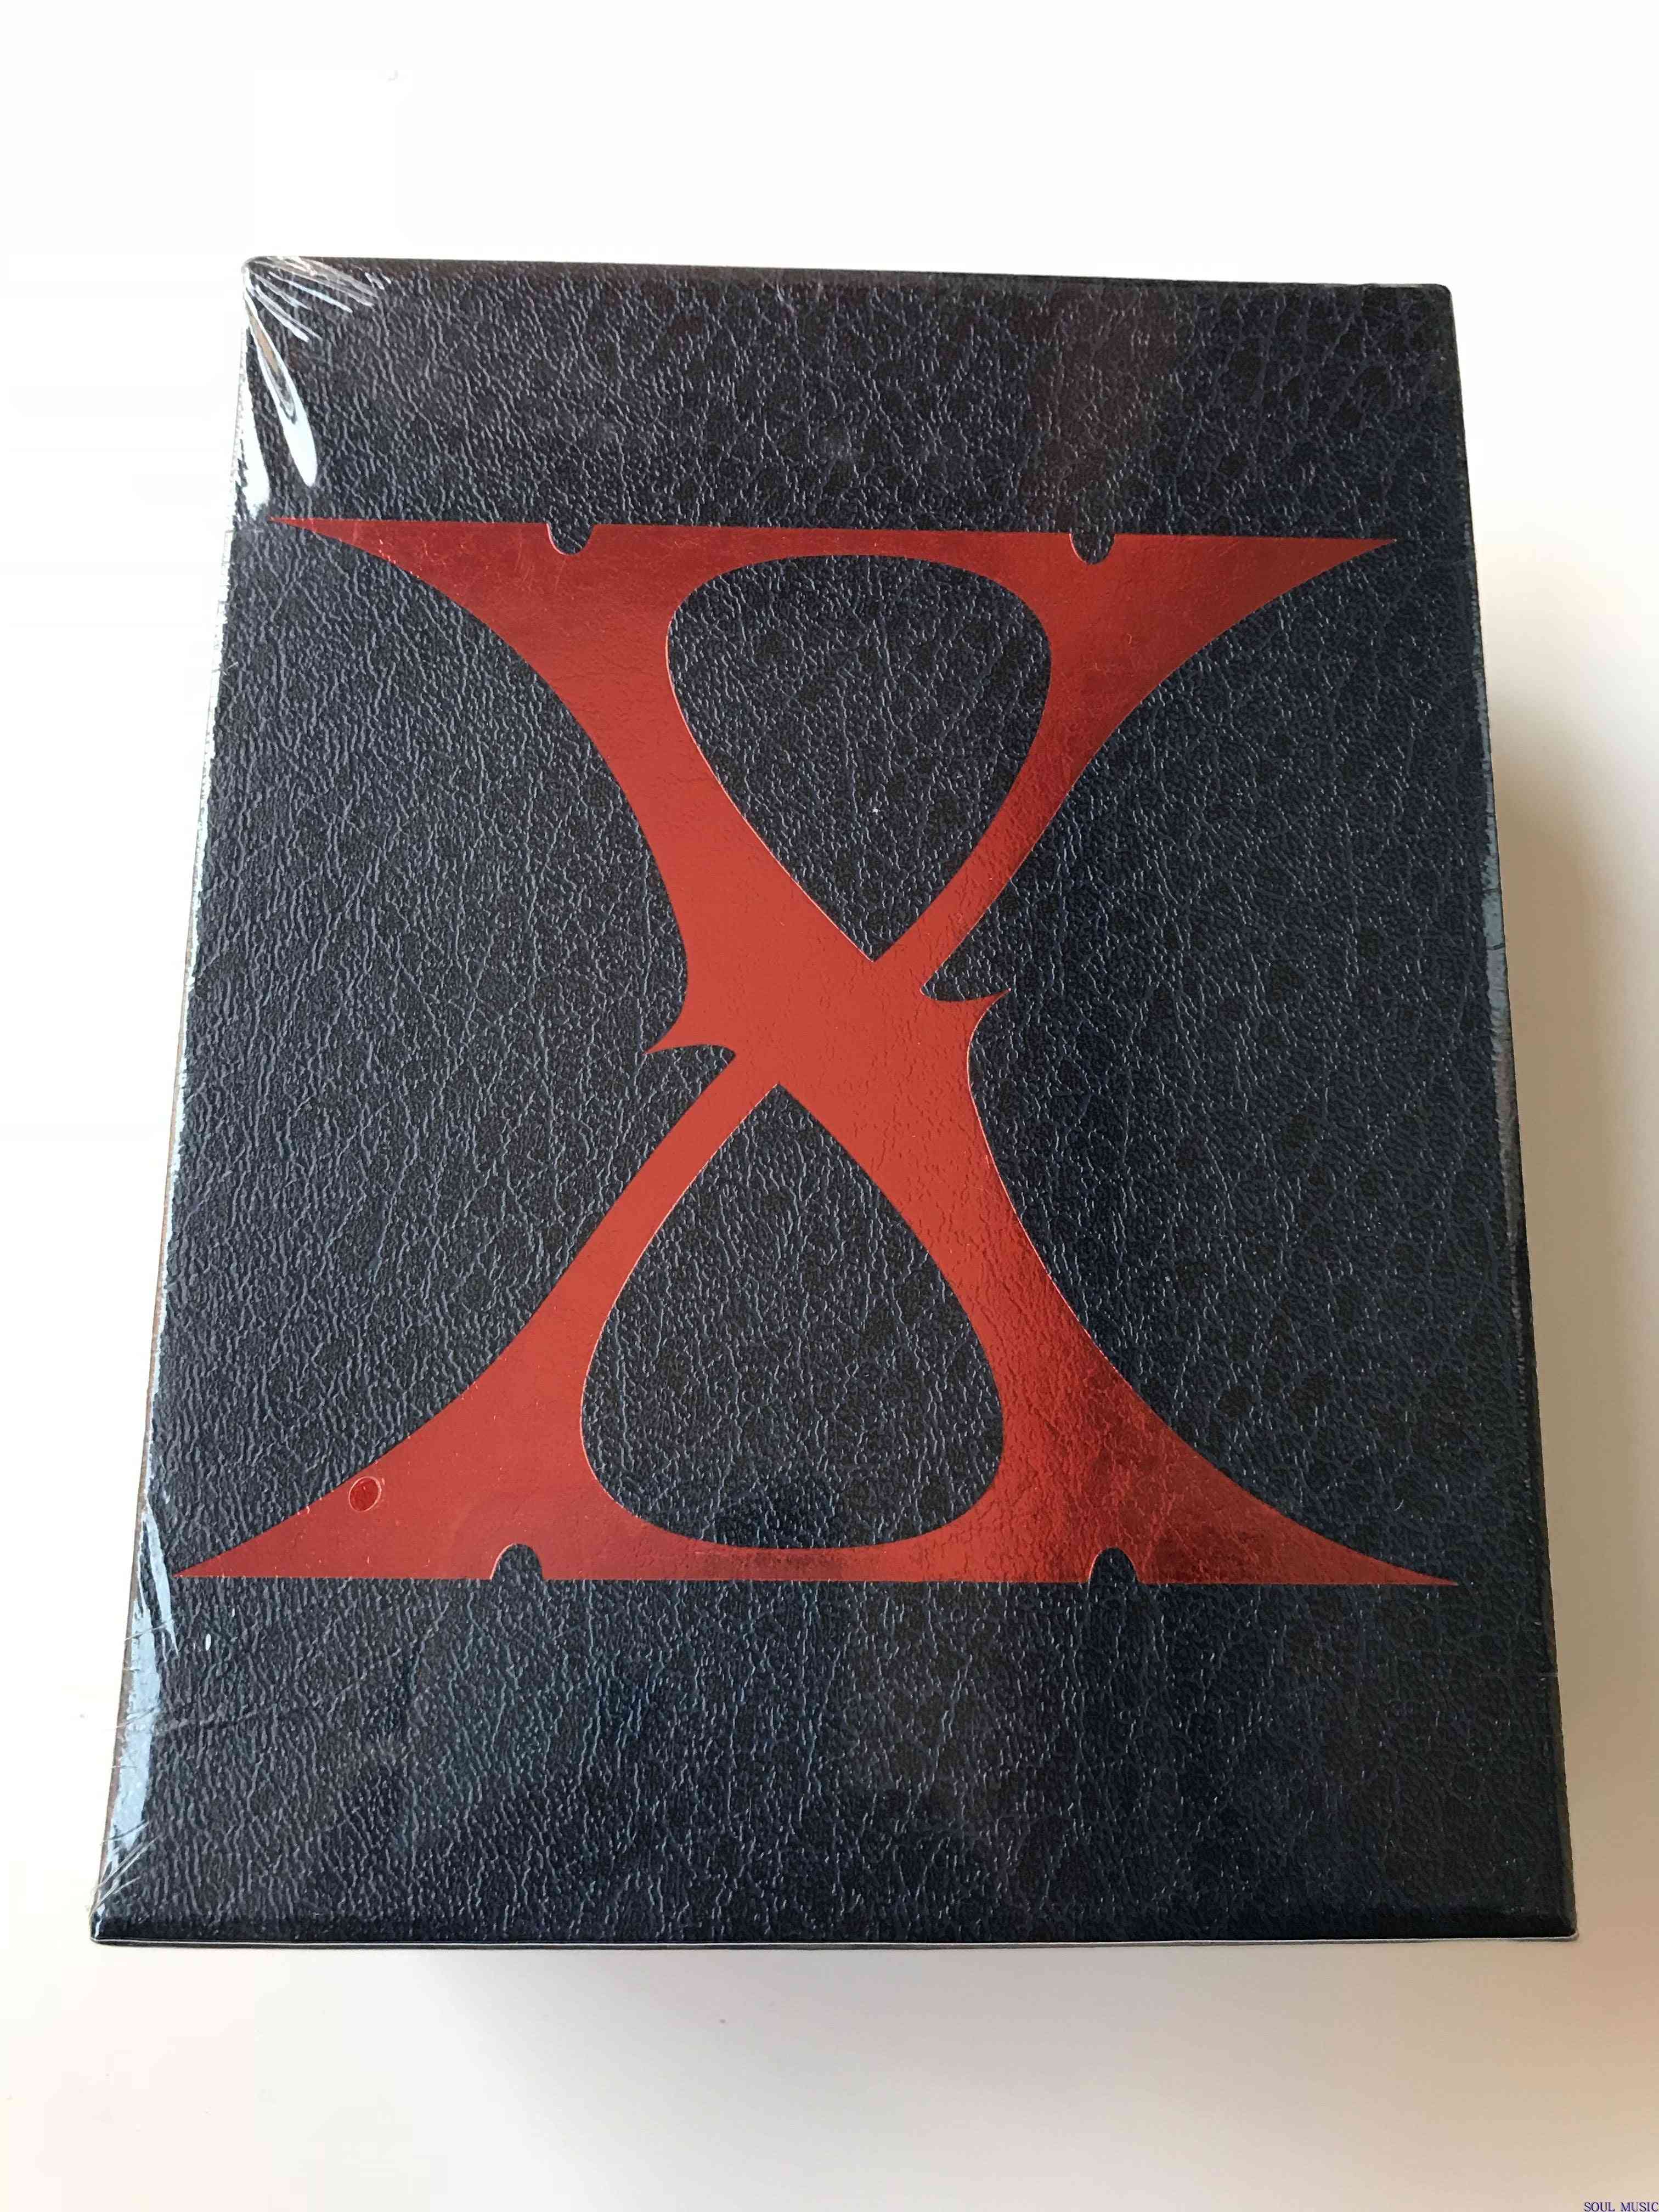 X scatola giappone 6dvd